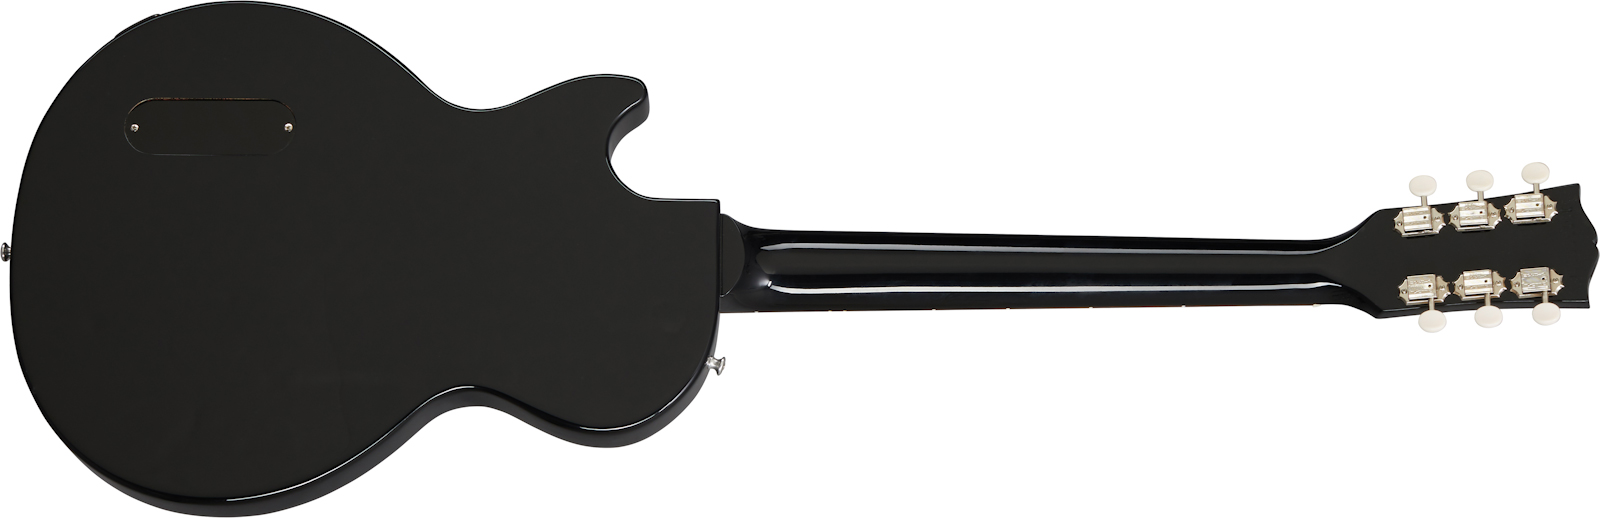 Gibson Les Paul Junior Original 2020 P90 Ht Rw - Ebony - Single cut electric guitar - Variation 1